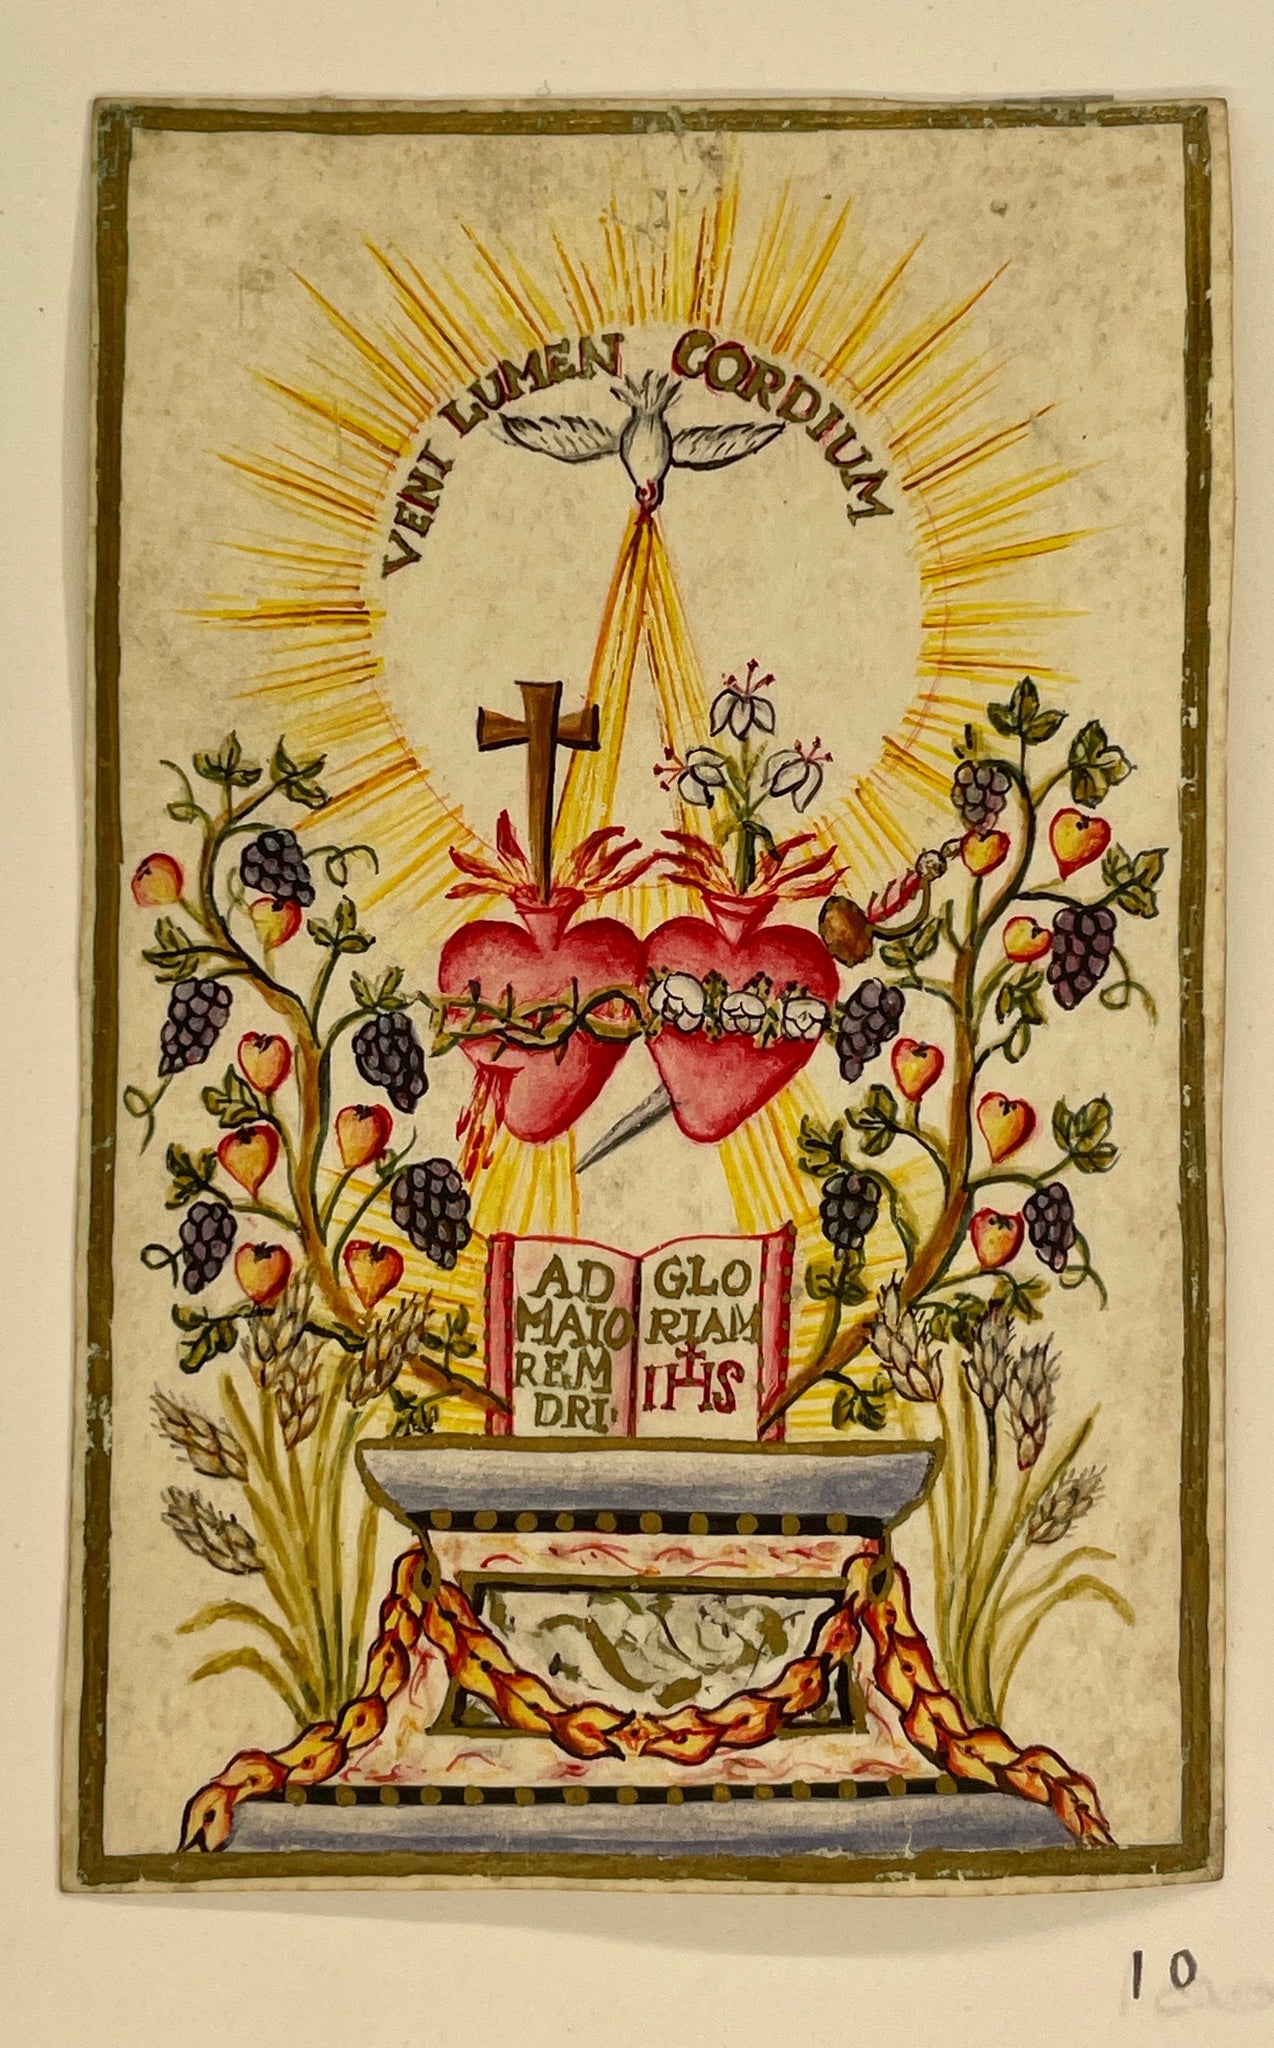 #10 - Handpainted Devotional Prayer Card, ca. 1820